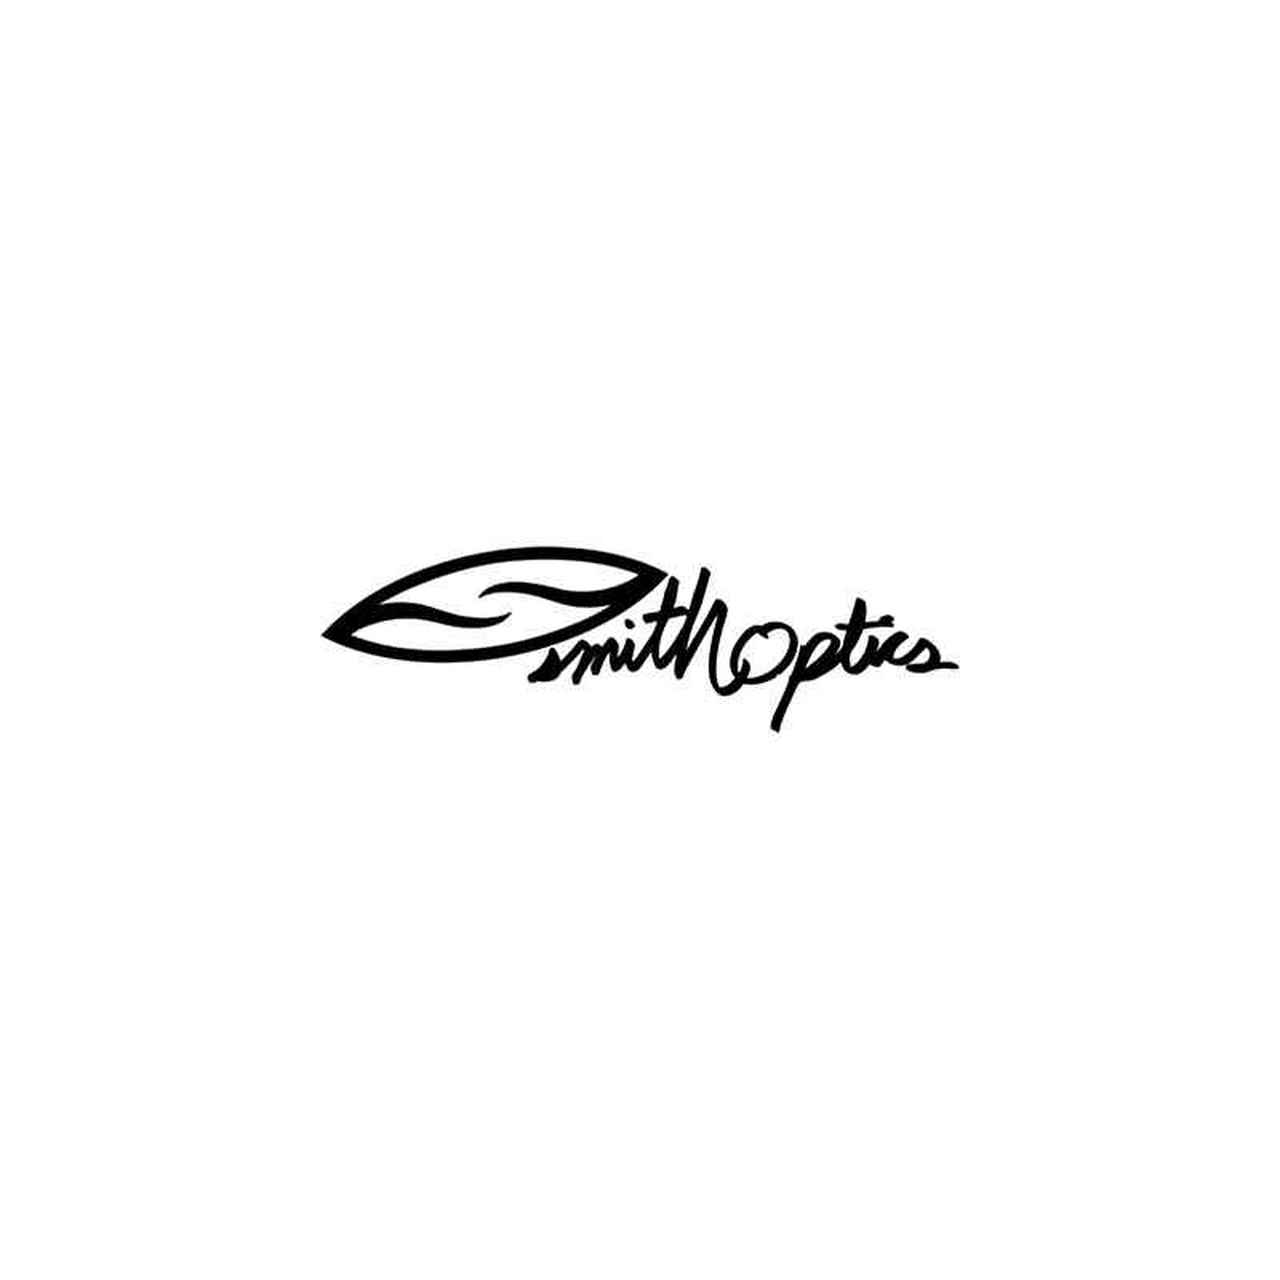 Corporate Logo s Smith Optics Style 2 Vinyl Sticker.